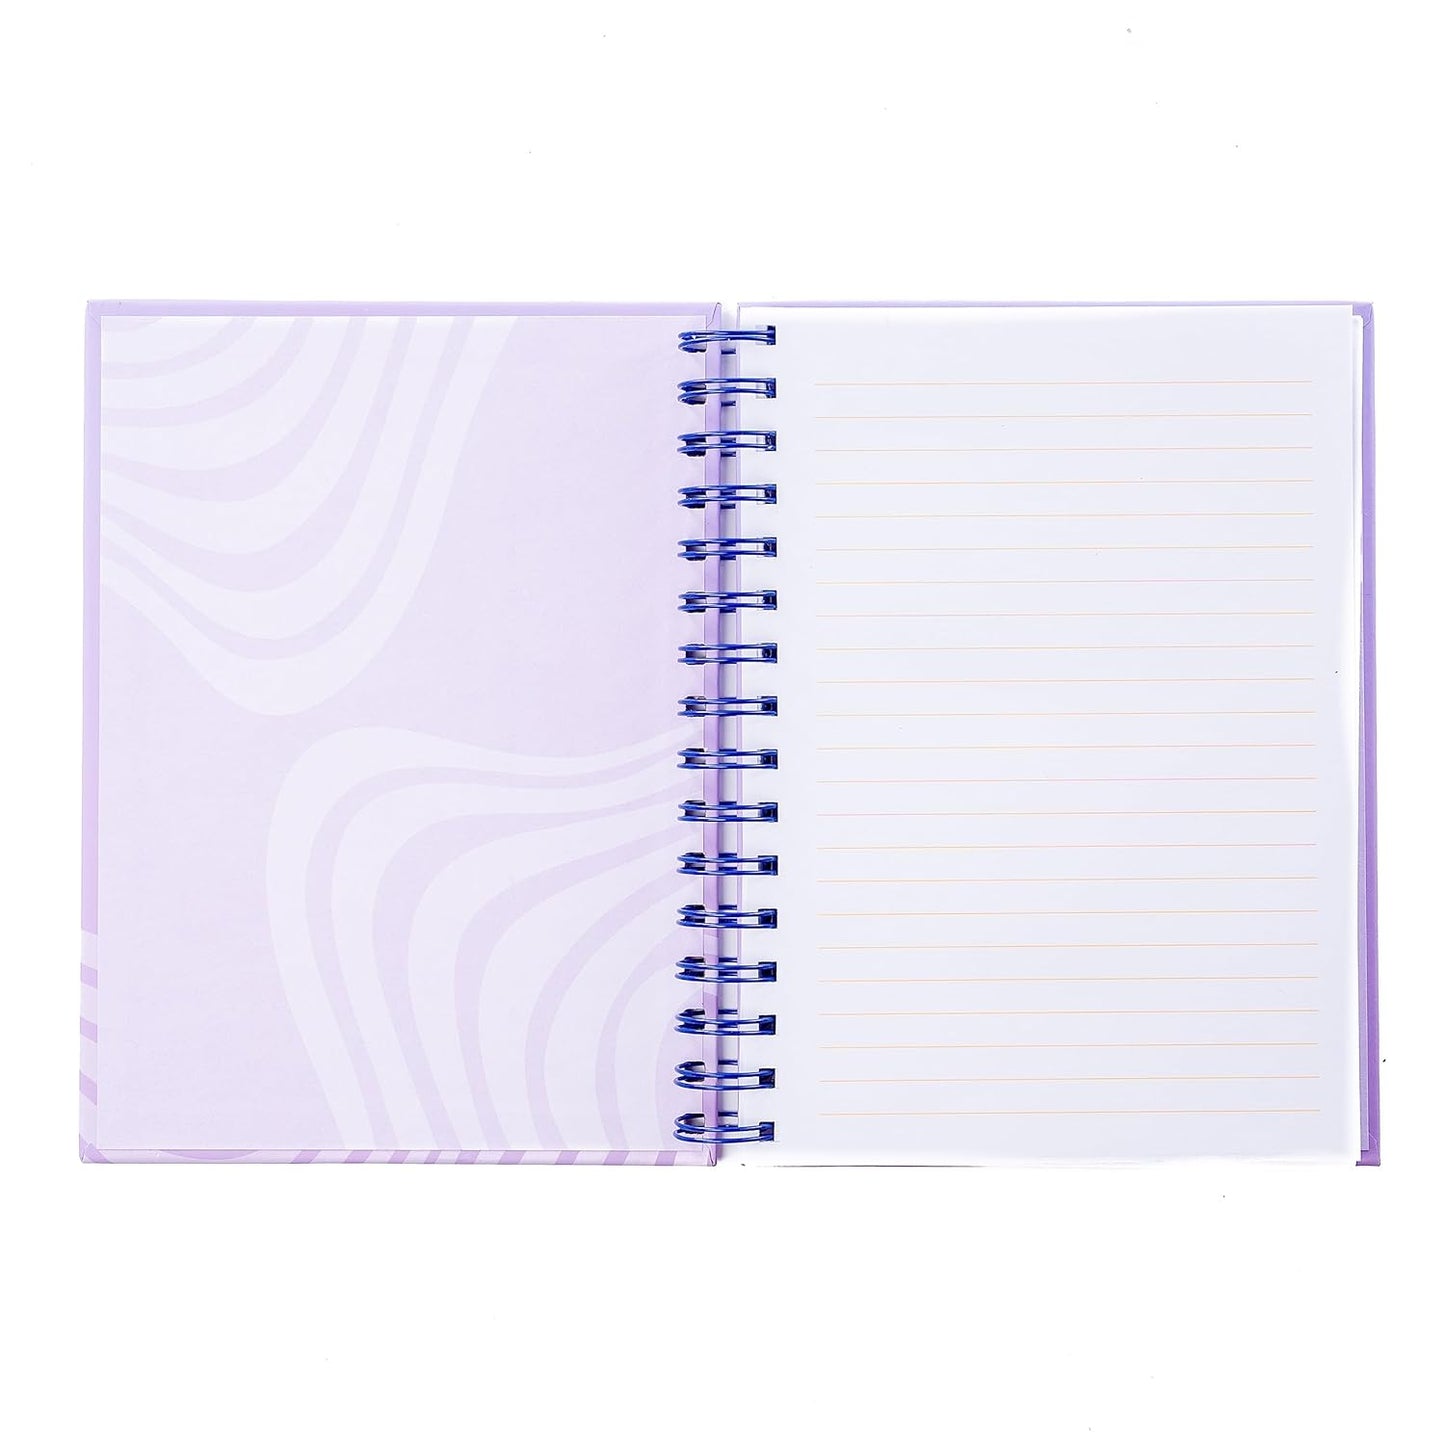 Overthinker Spiral Bound Notebook | Reflective Cover Journal | Retro Violet